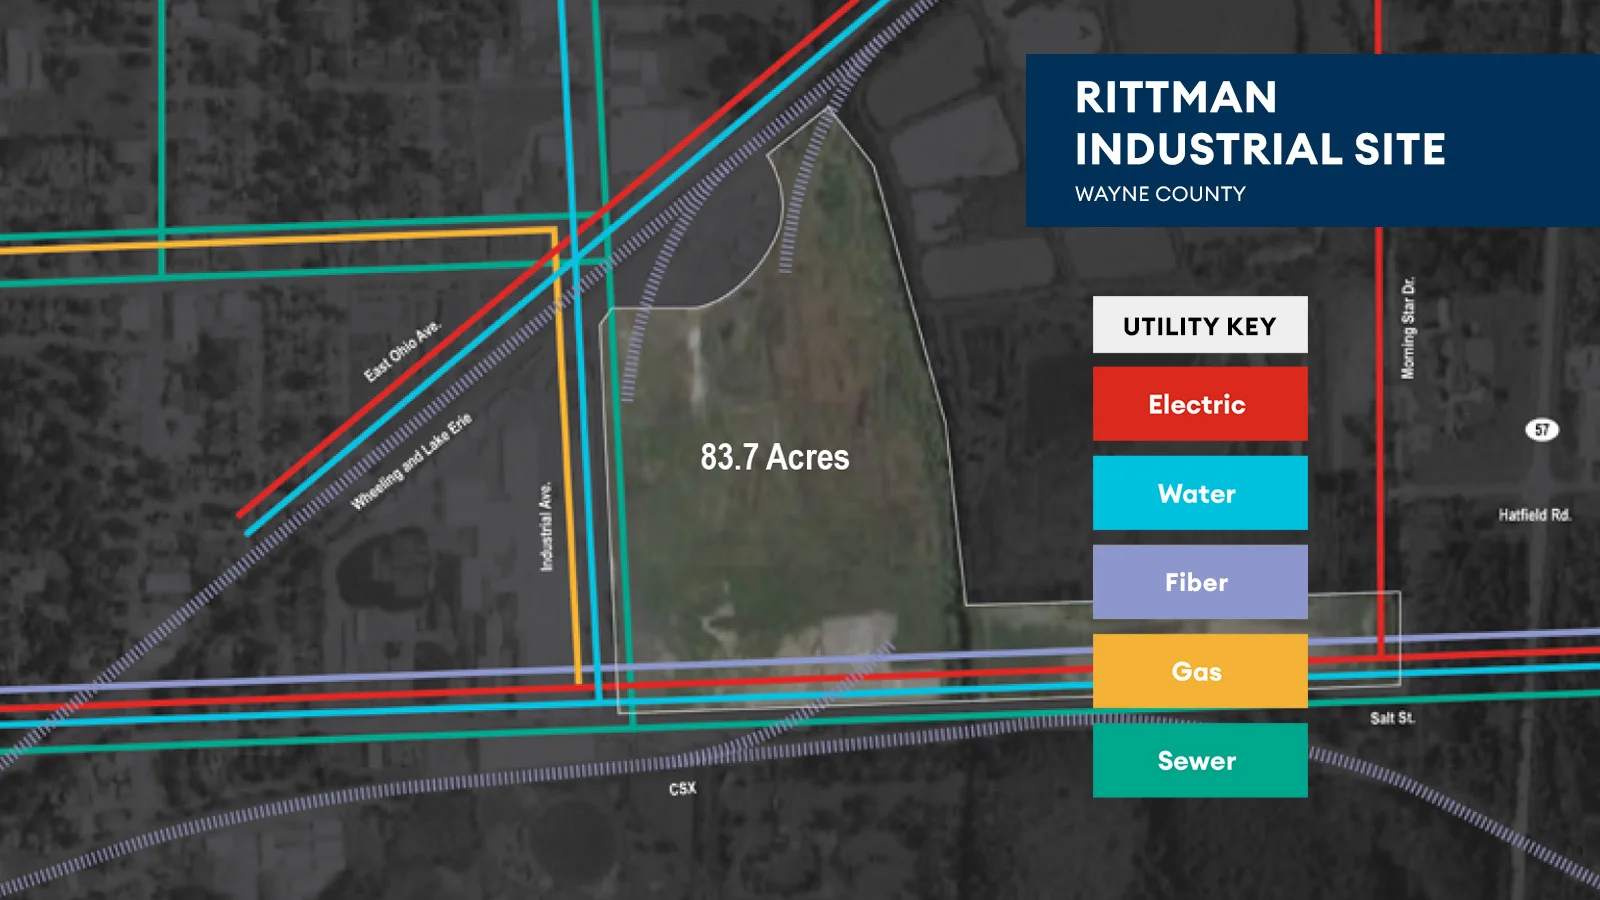 Rittman Industrial Site Utility Map